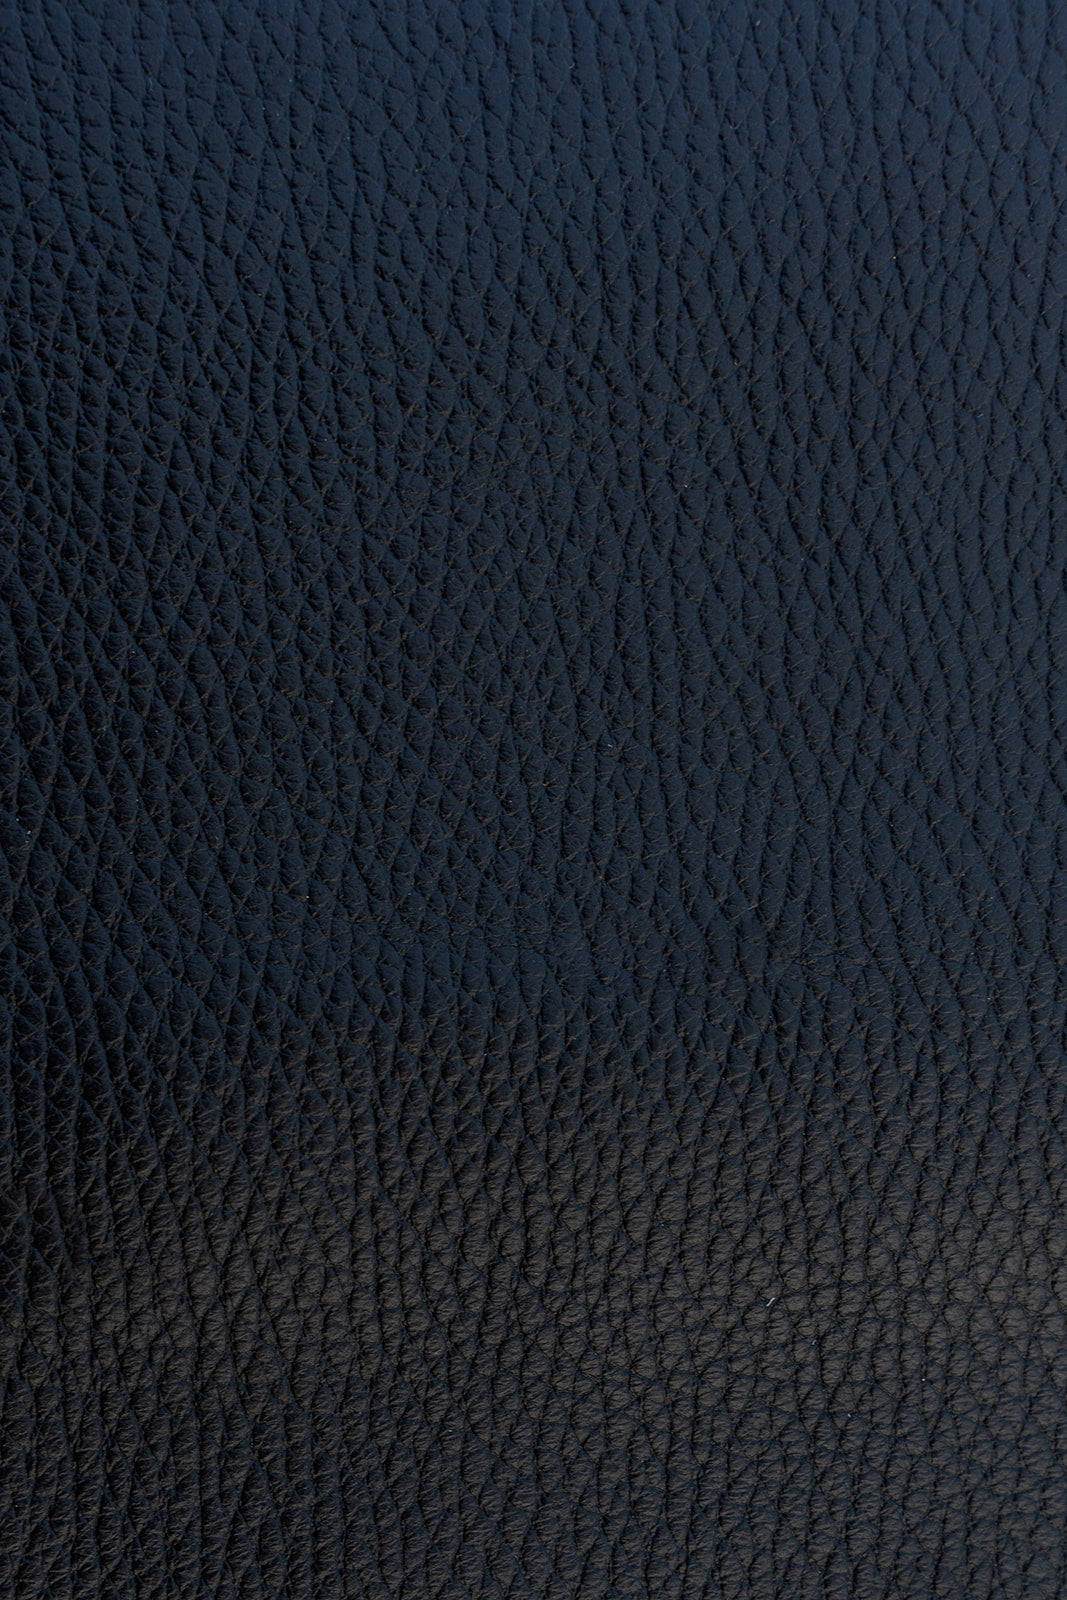 JL tote bag leather - Caviar black